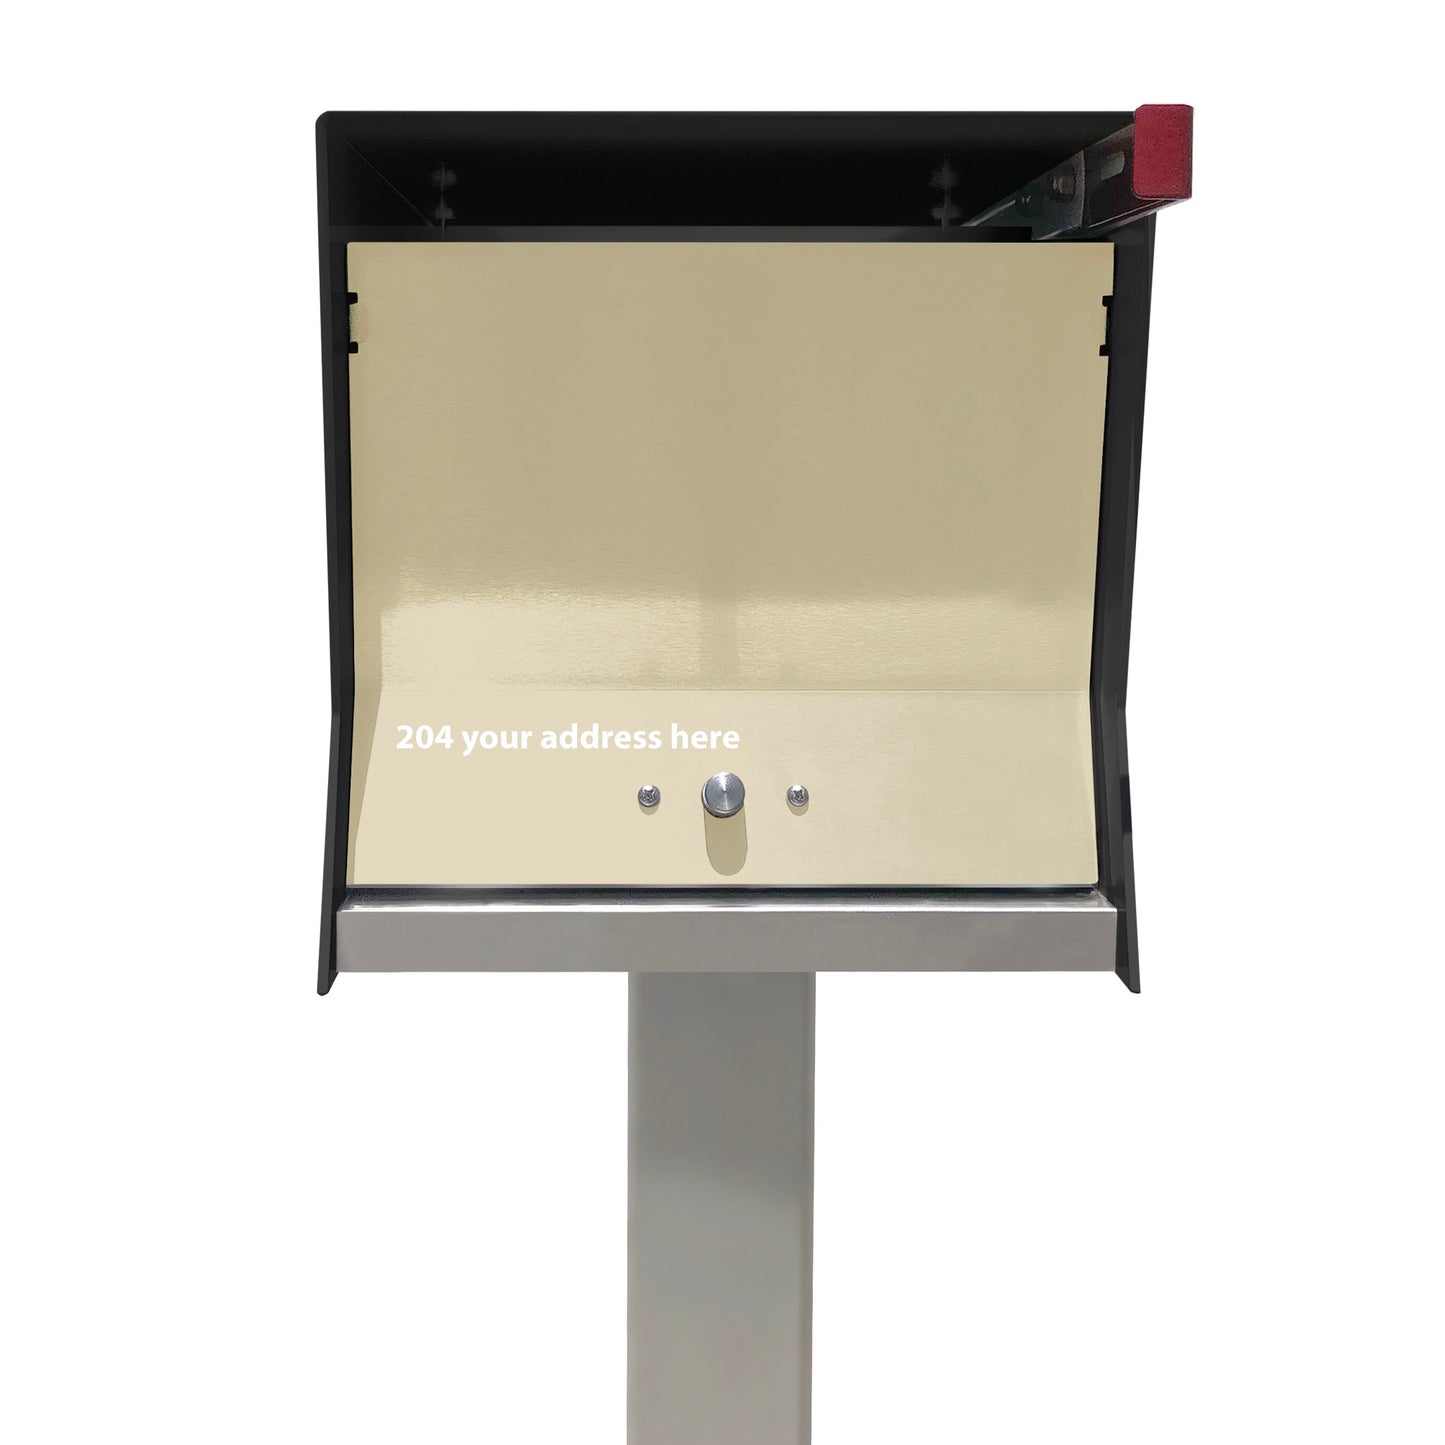 The Original Retrobox in COCONUT - Modern Mailbox light brown